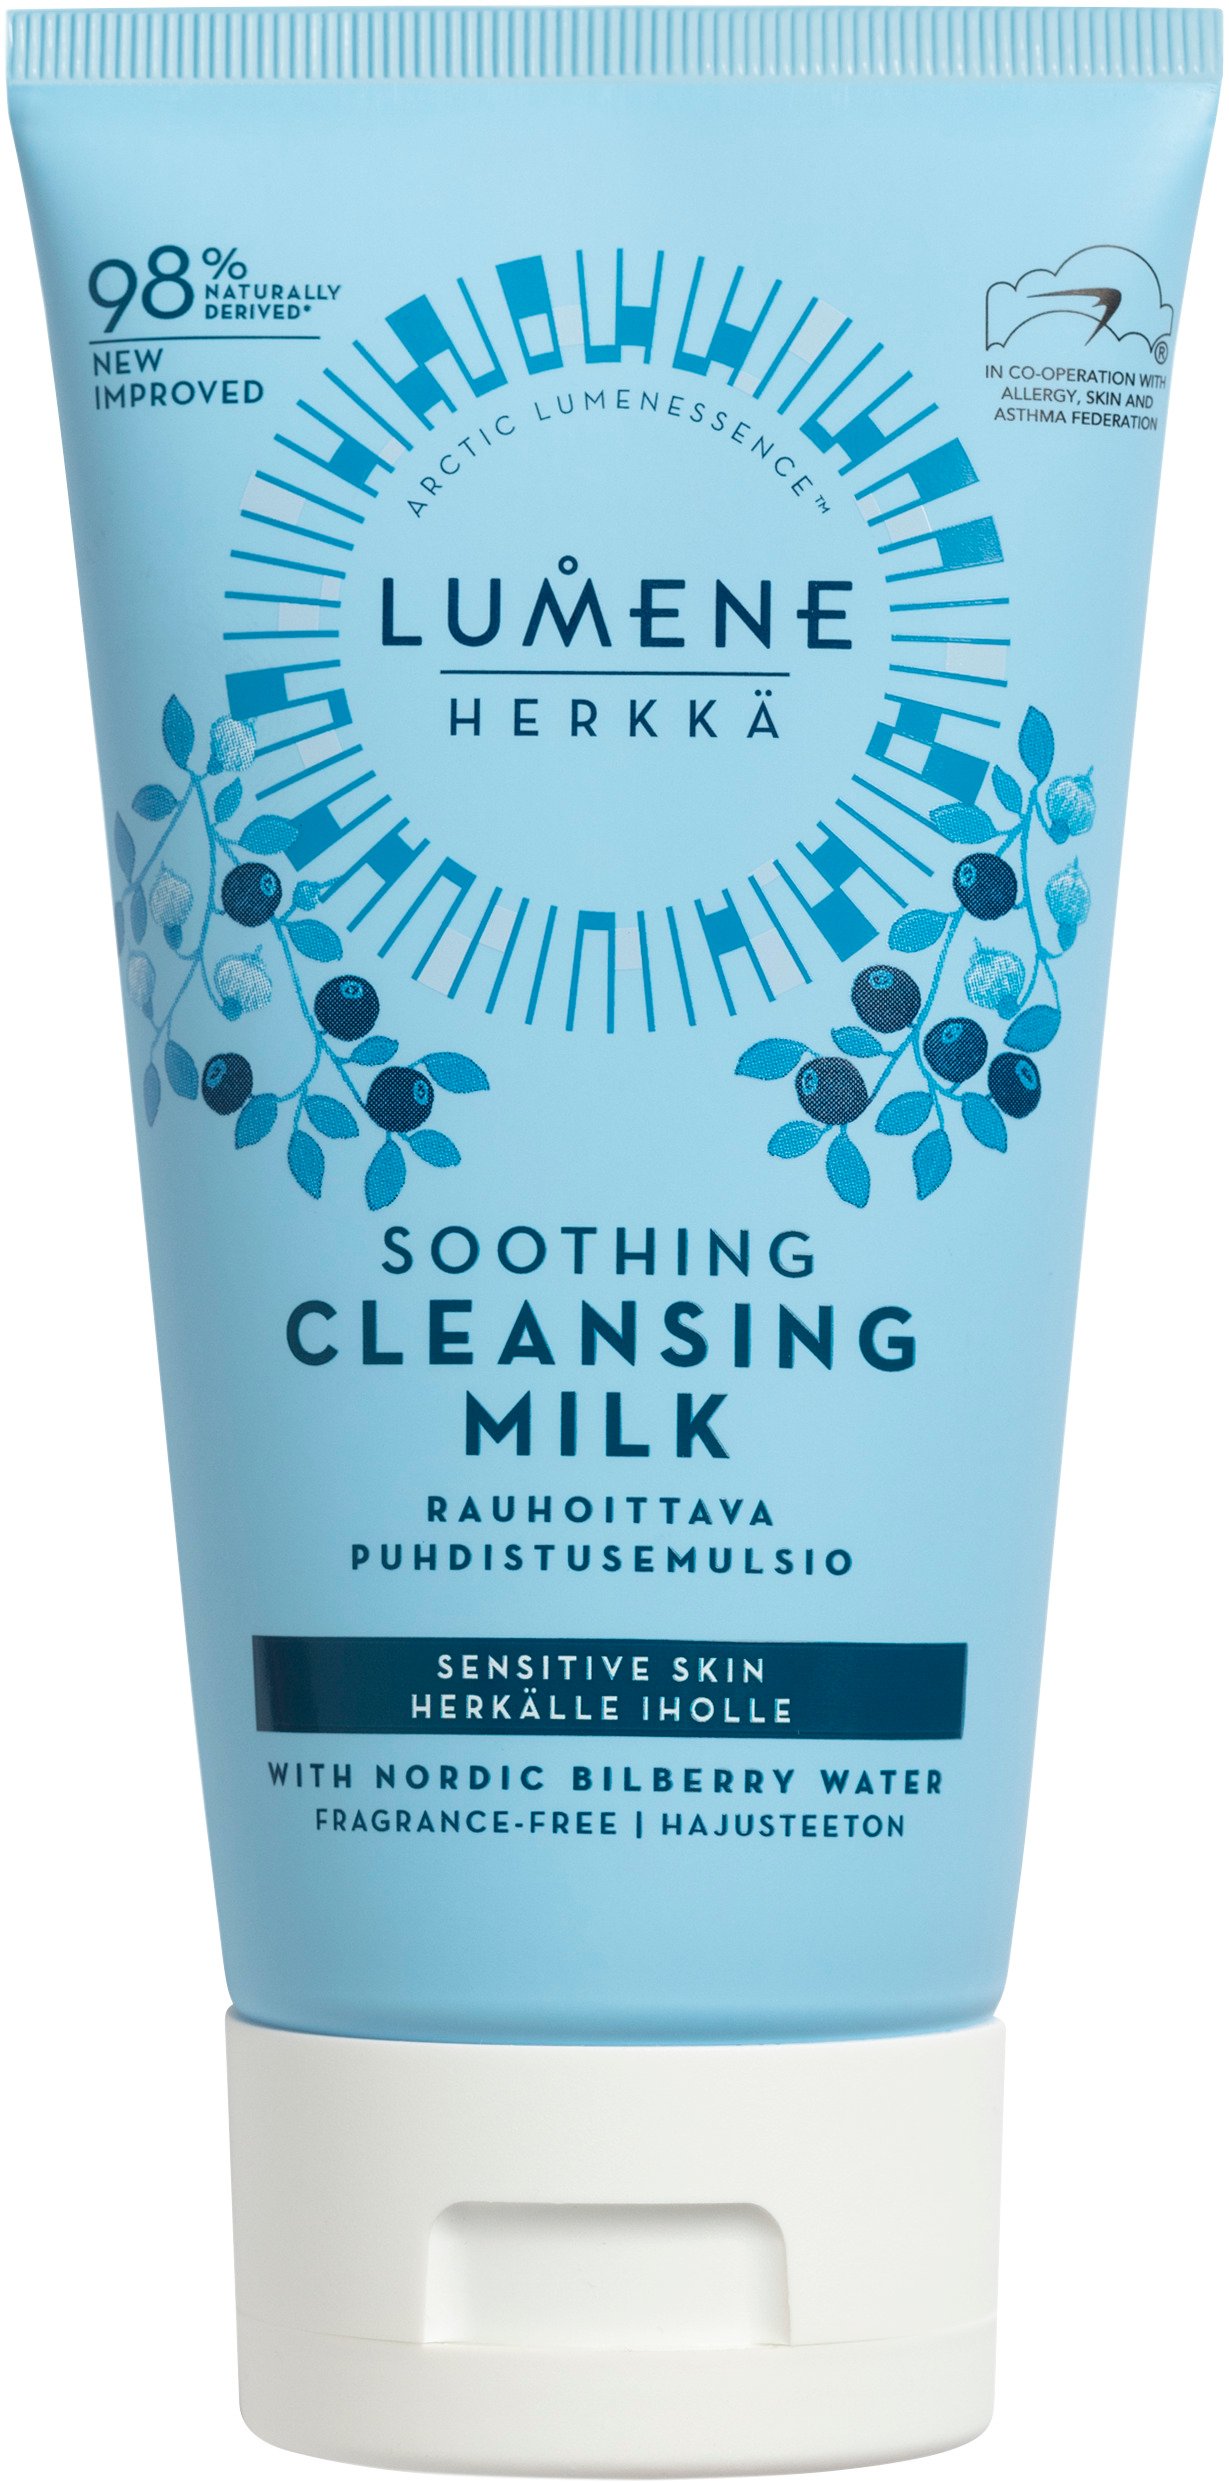 Lumene HERKKÄ Soothing Cleansing Milk 150 ml